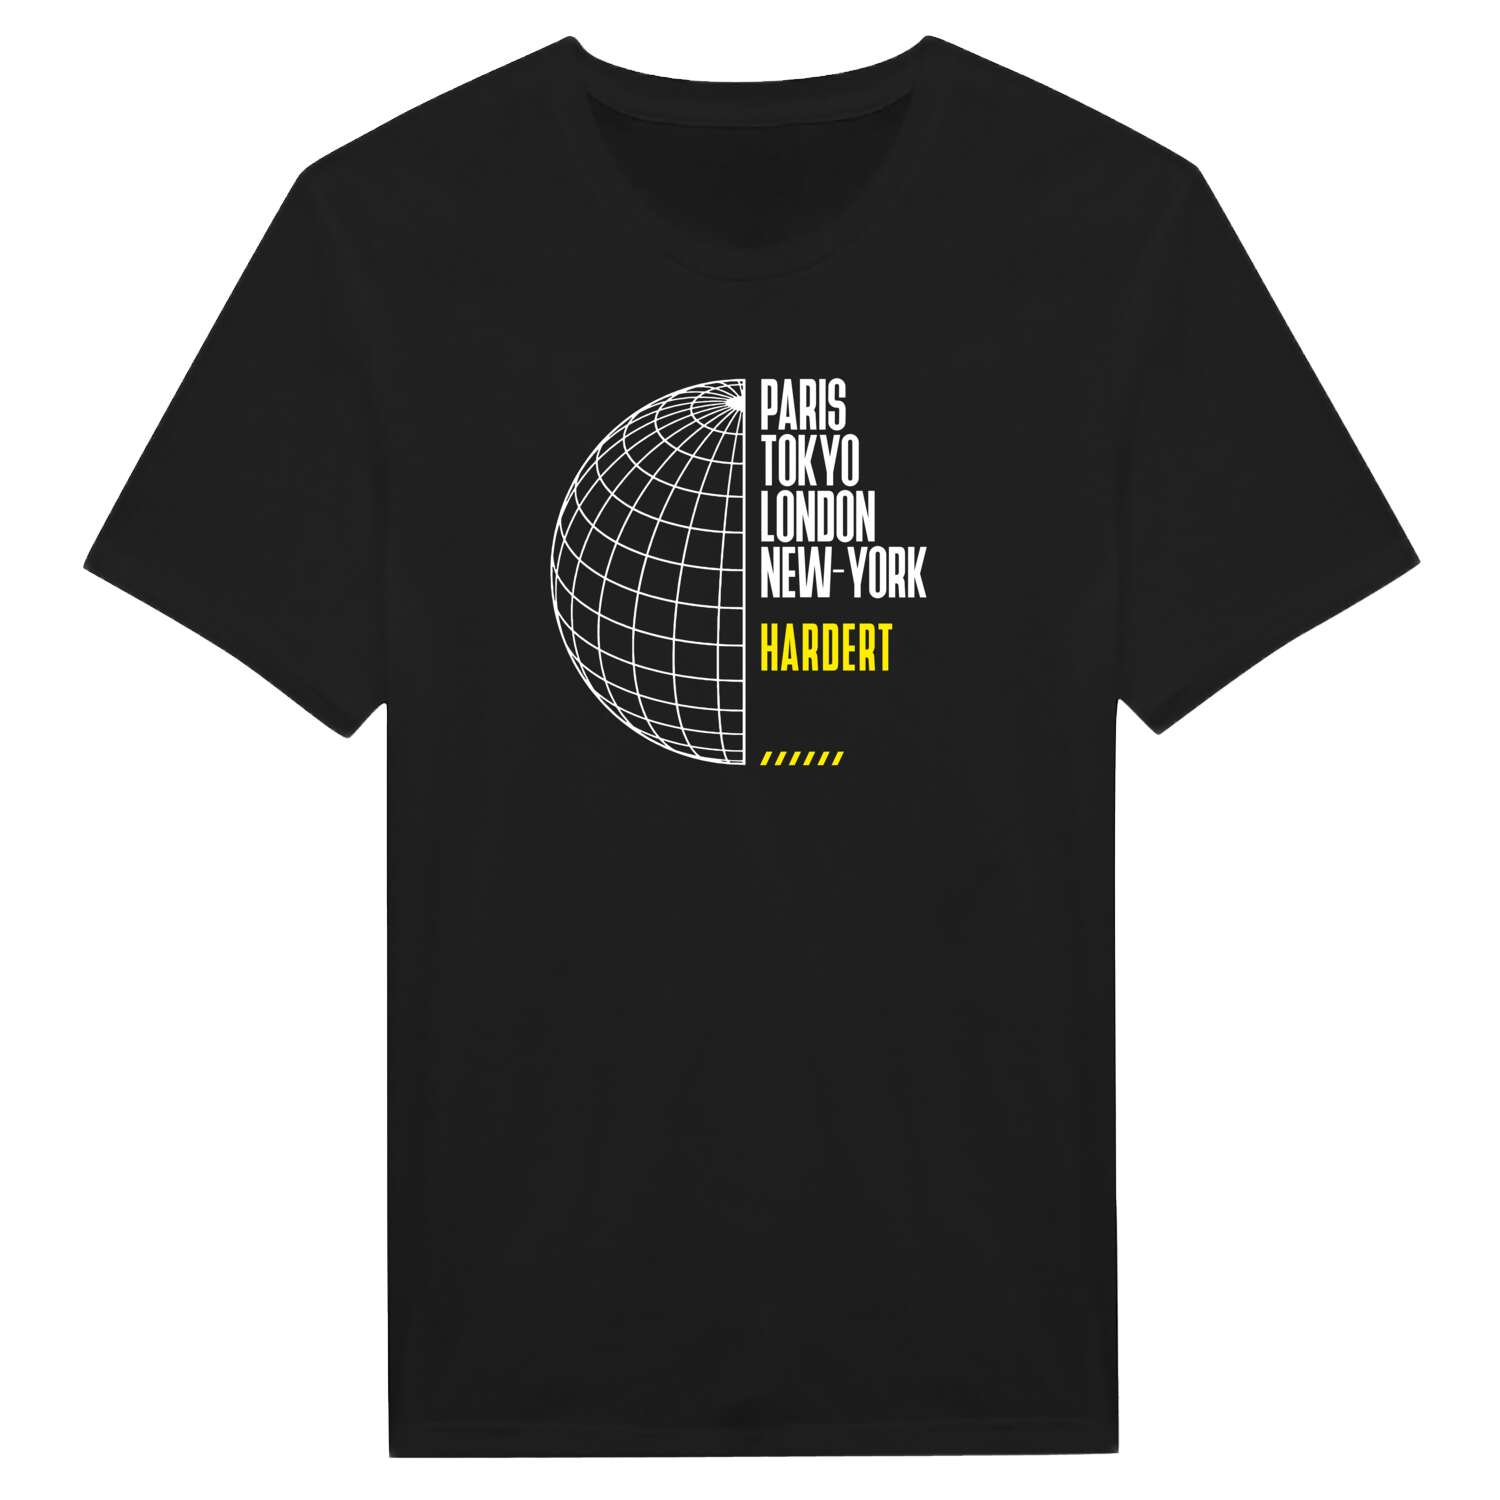 Hardert T-Shirt »Paris Tokyo London«